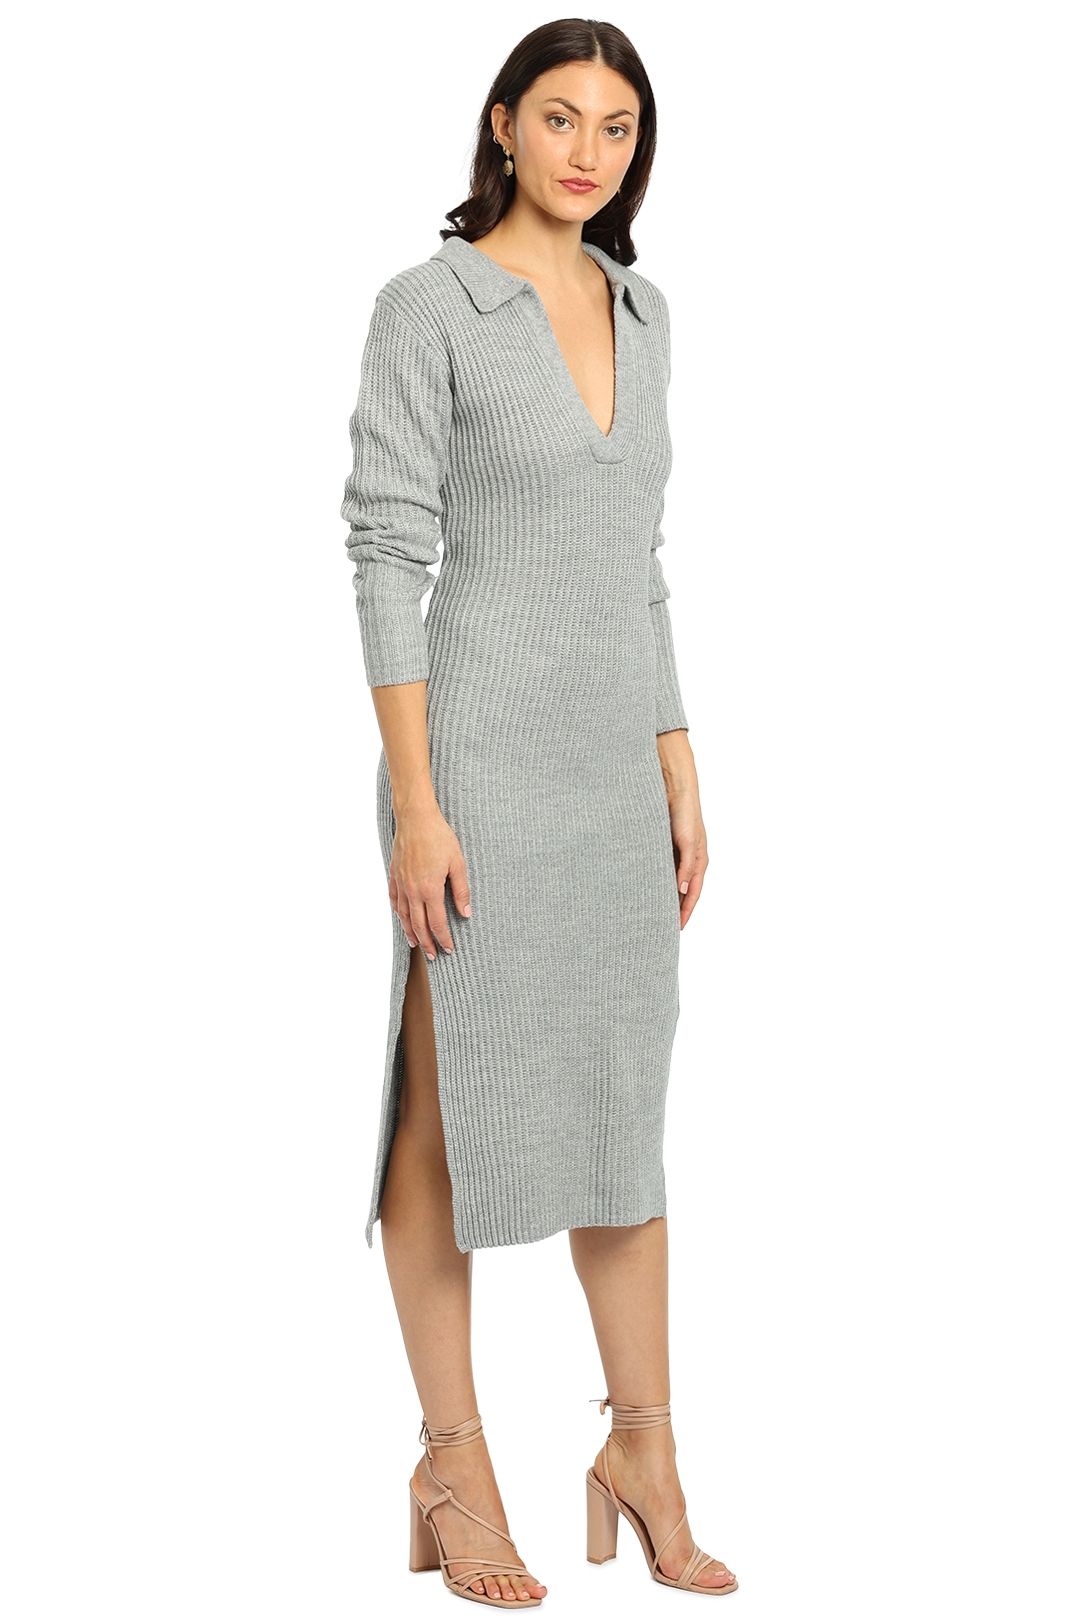 Staple The Label Ivy Knit Midi Dress Grey Marle Long Sleeve